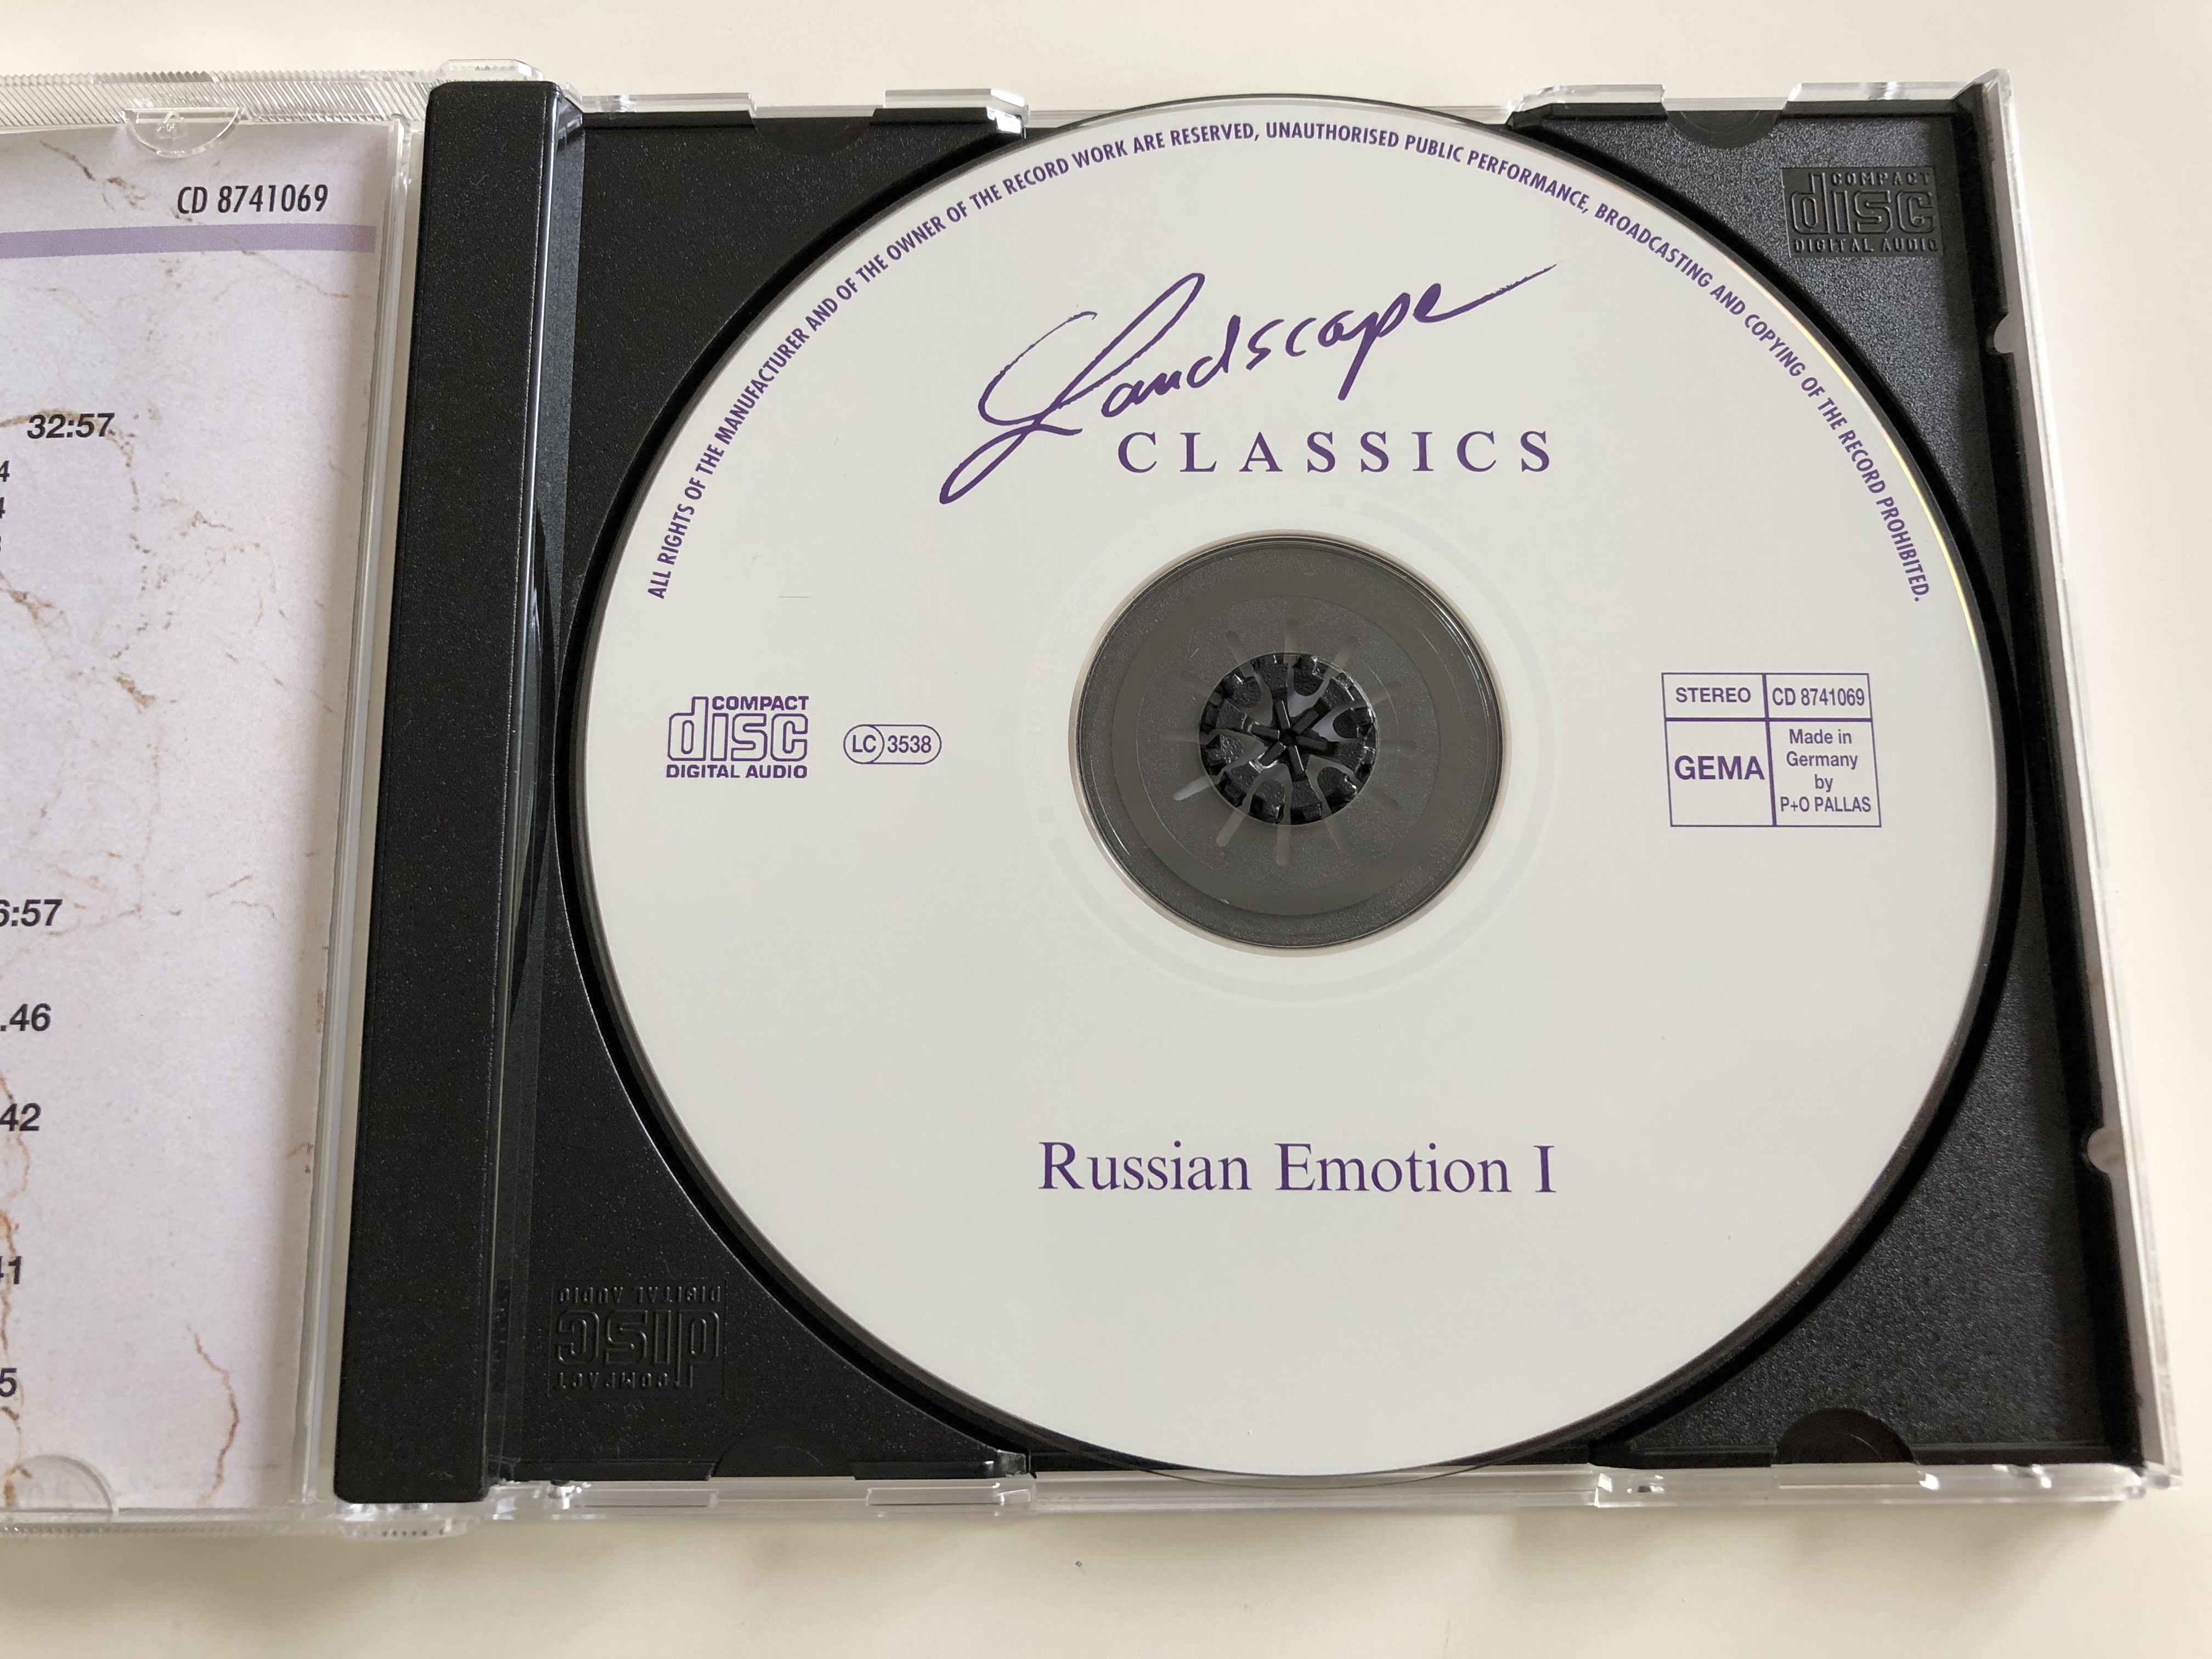 -russian-emotion-i-landscape-classics-moussorgsky-borodin-glinka-tschaikovsky-audio-cd-cd-8741069-3-.jpg